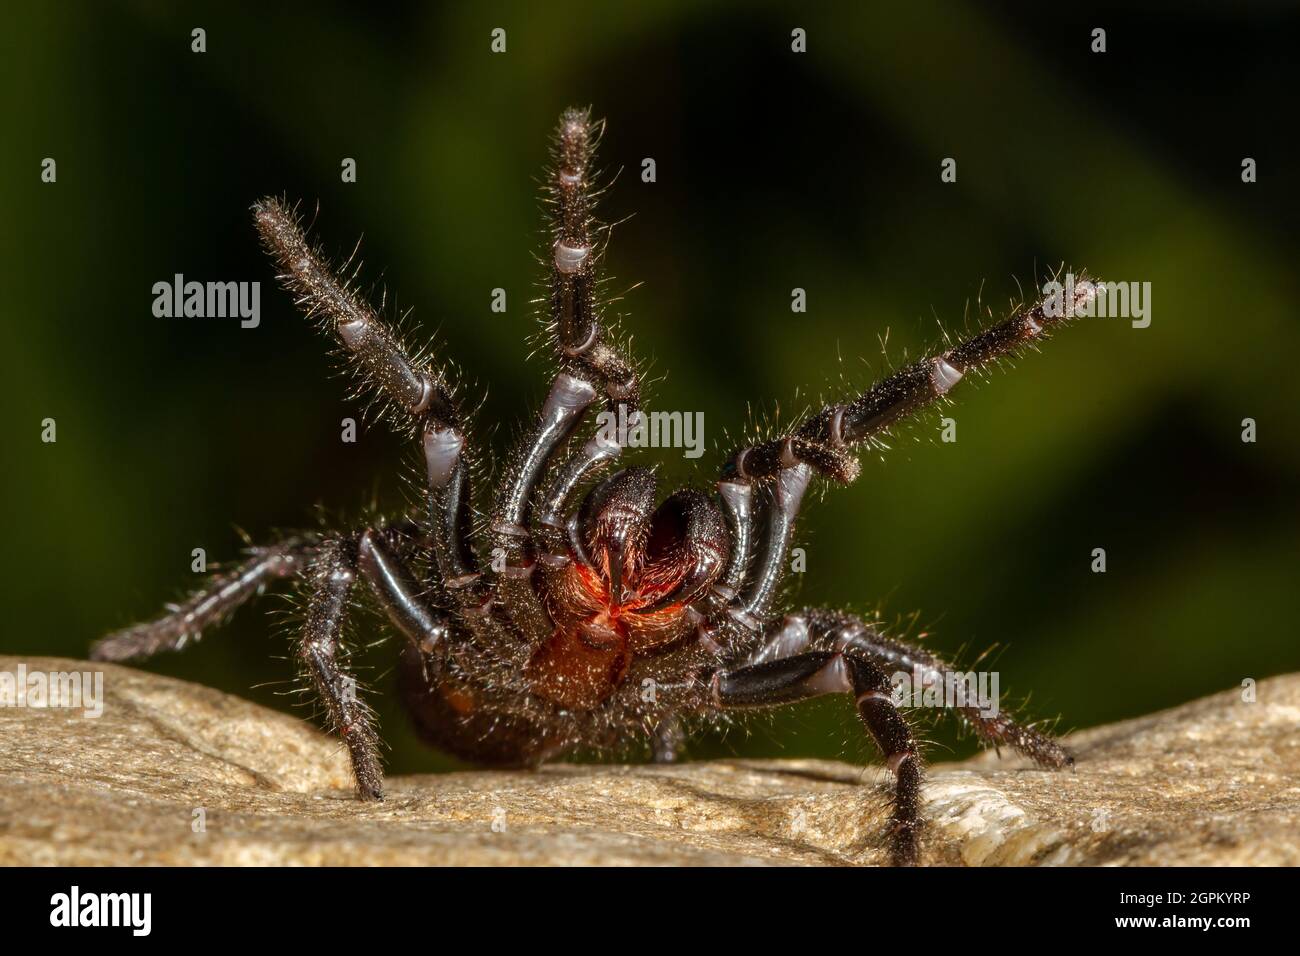 Australian Sydney Funnel Web Spider Banque D'Images